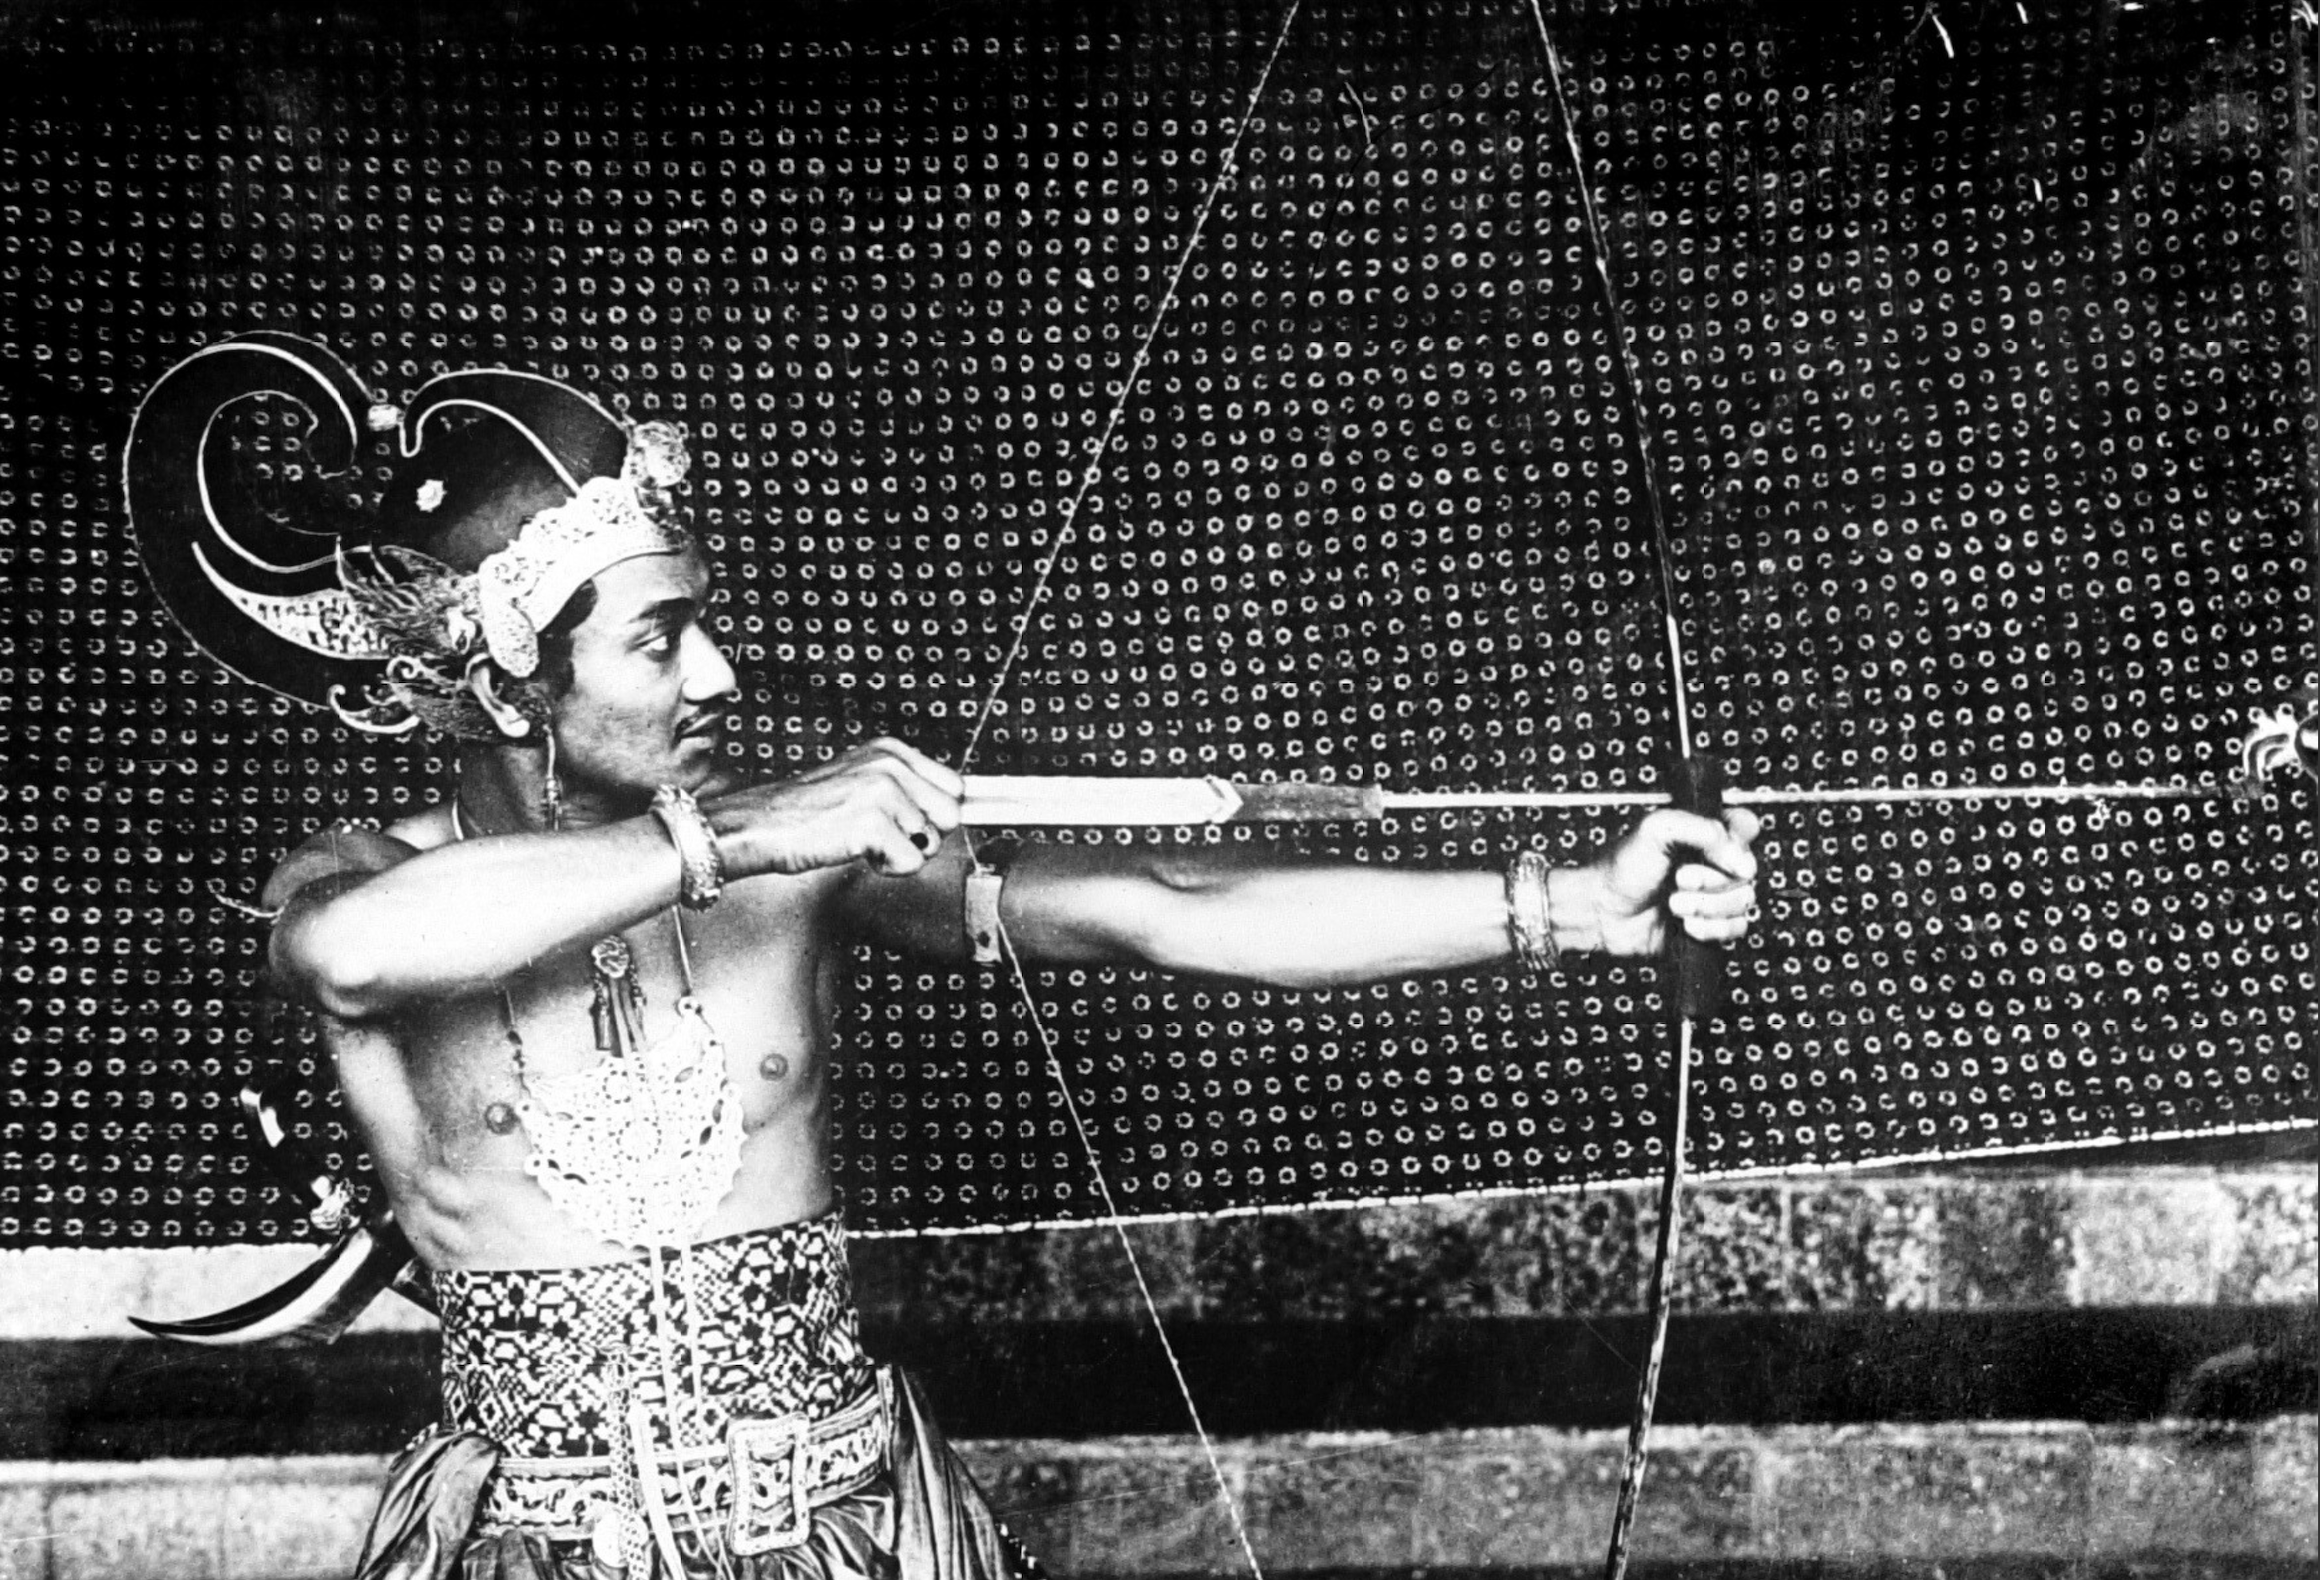 A Javanese archer